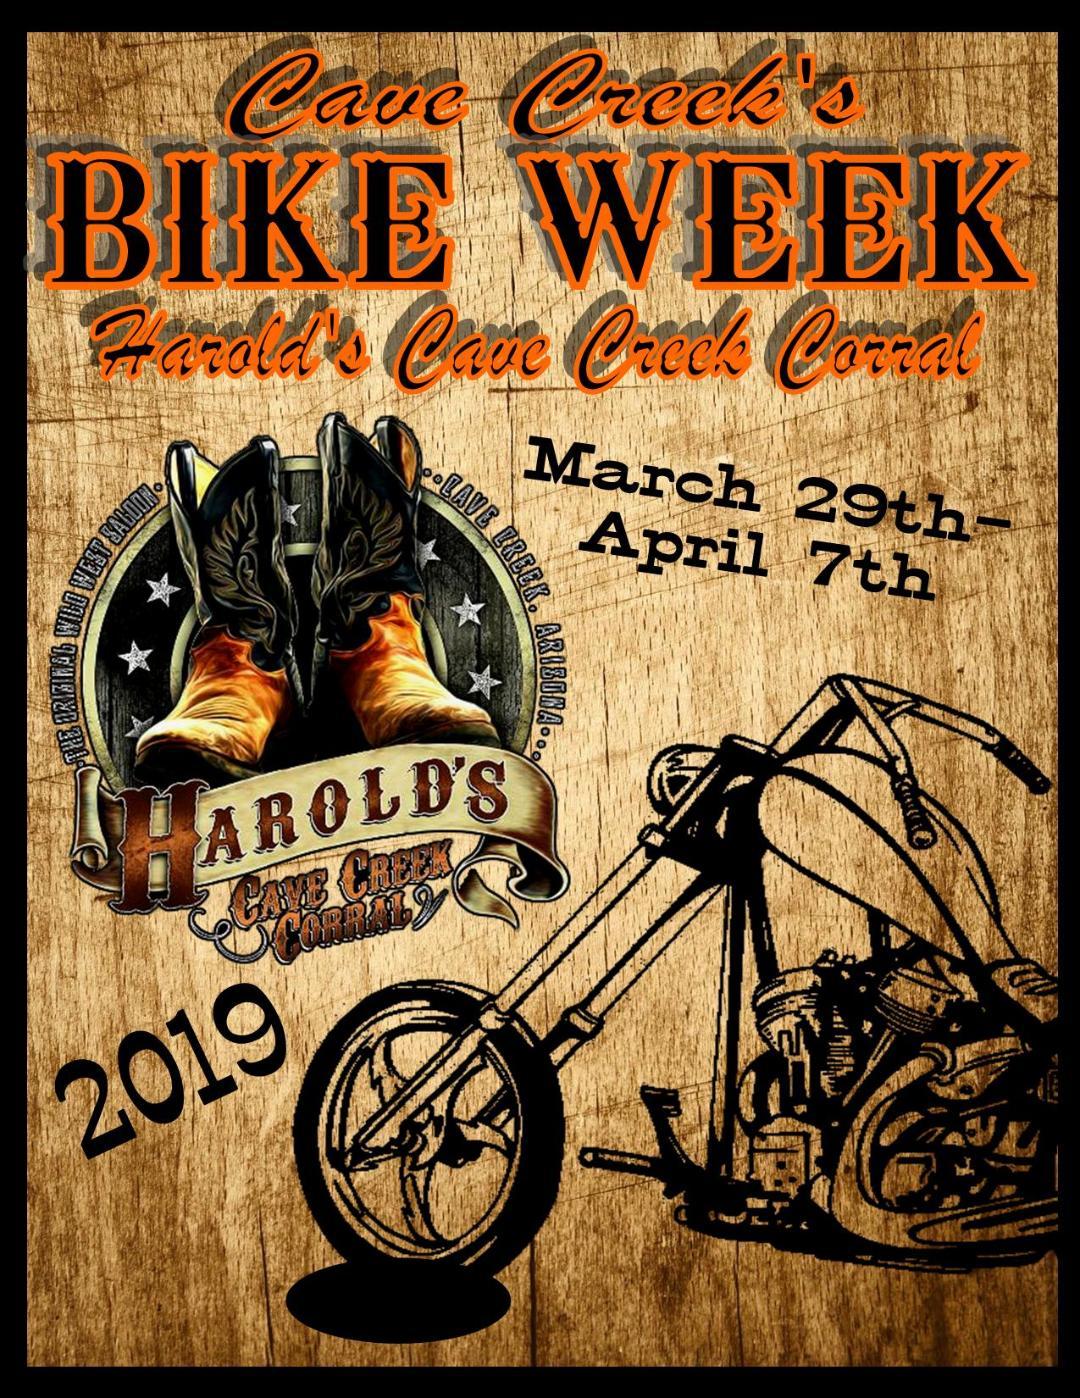 bike week flyer Harold's Cave Creek Corral